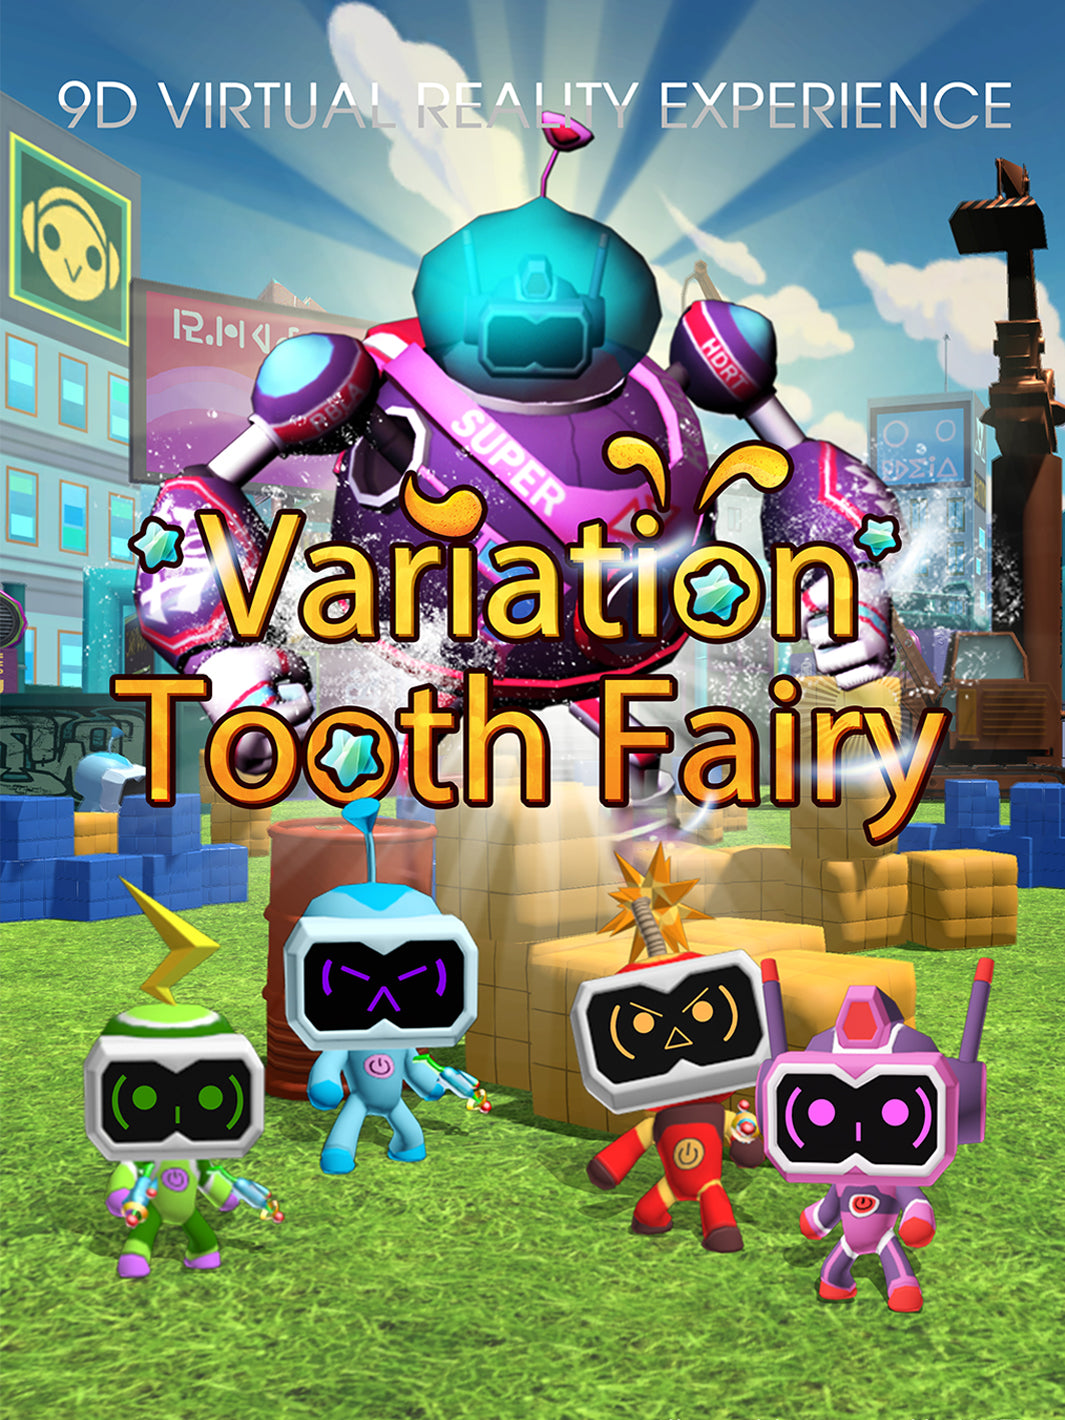 Variation tooth fairy - ShallxR VR Games